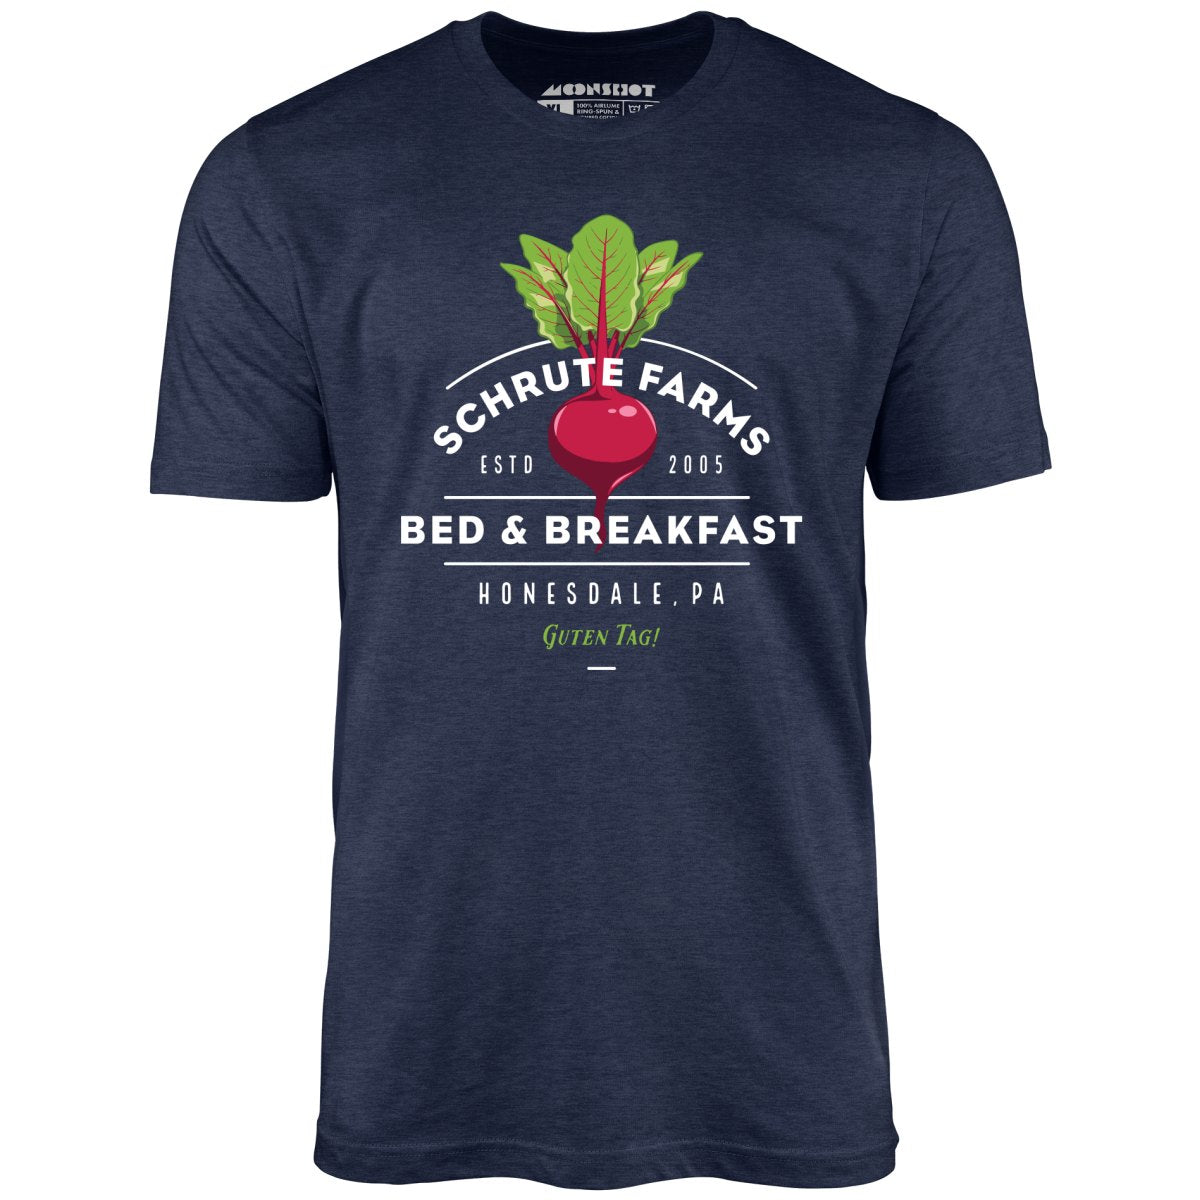 Schrute Farms Bed & Breakfast - Unisex T-Shirt